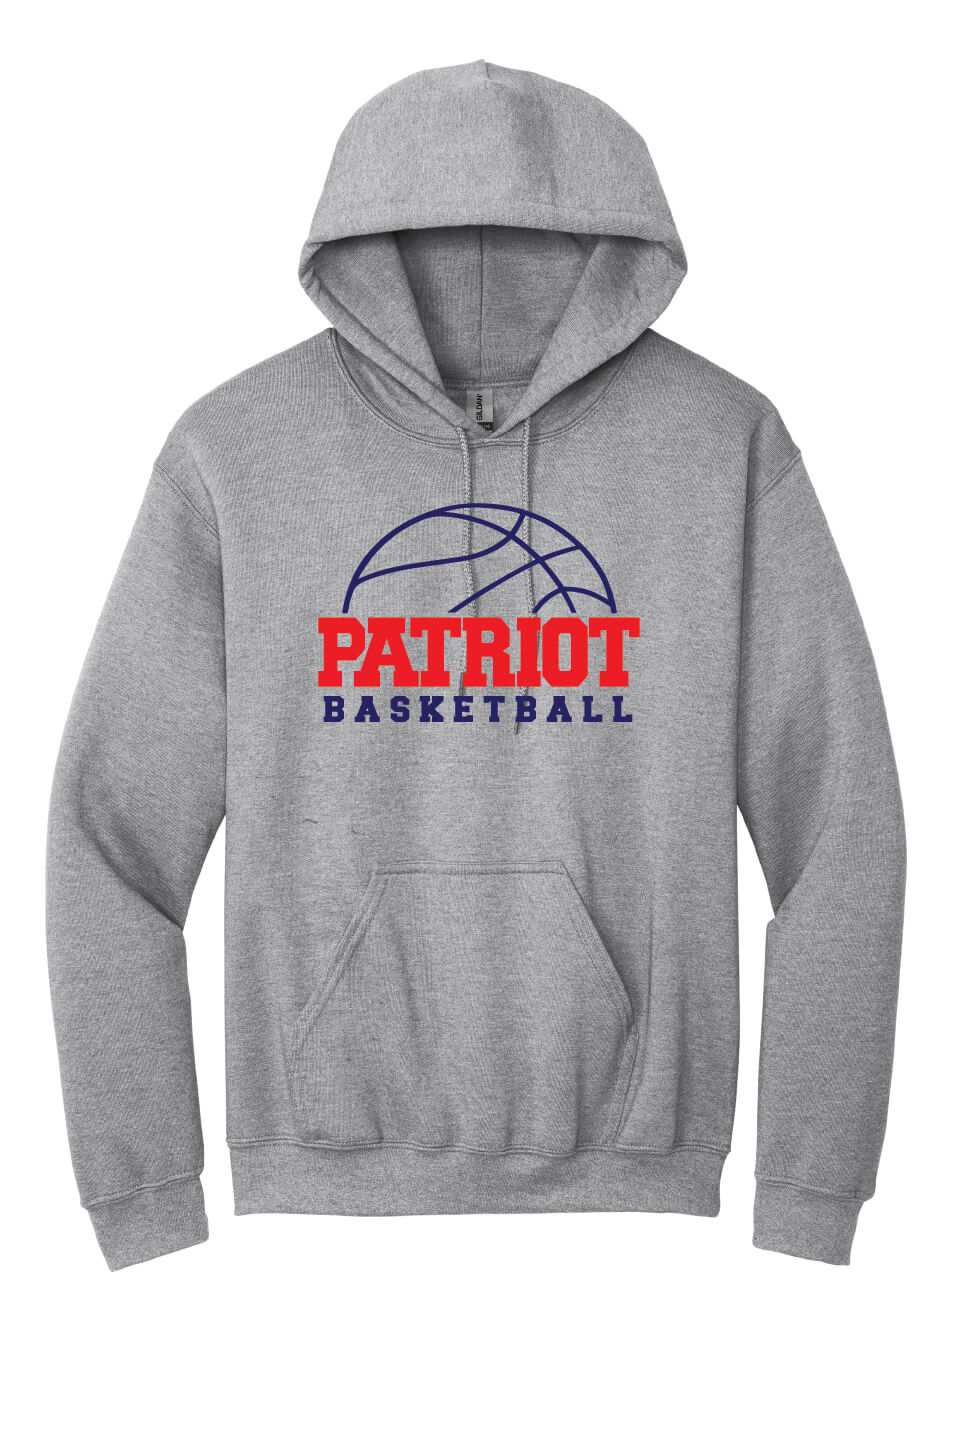 Patriots Basketball Hoodie gray